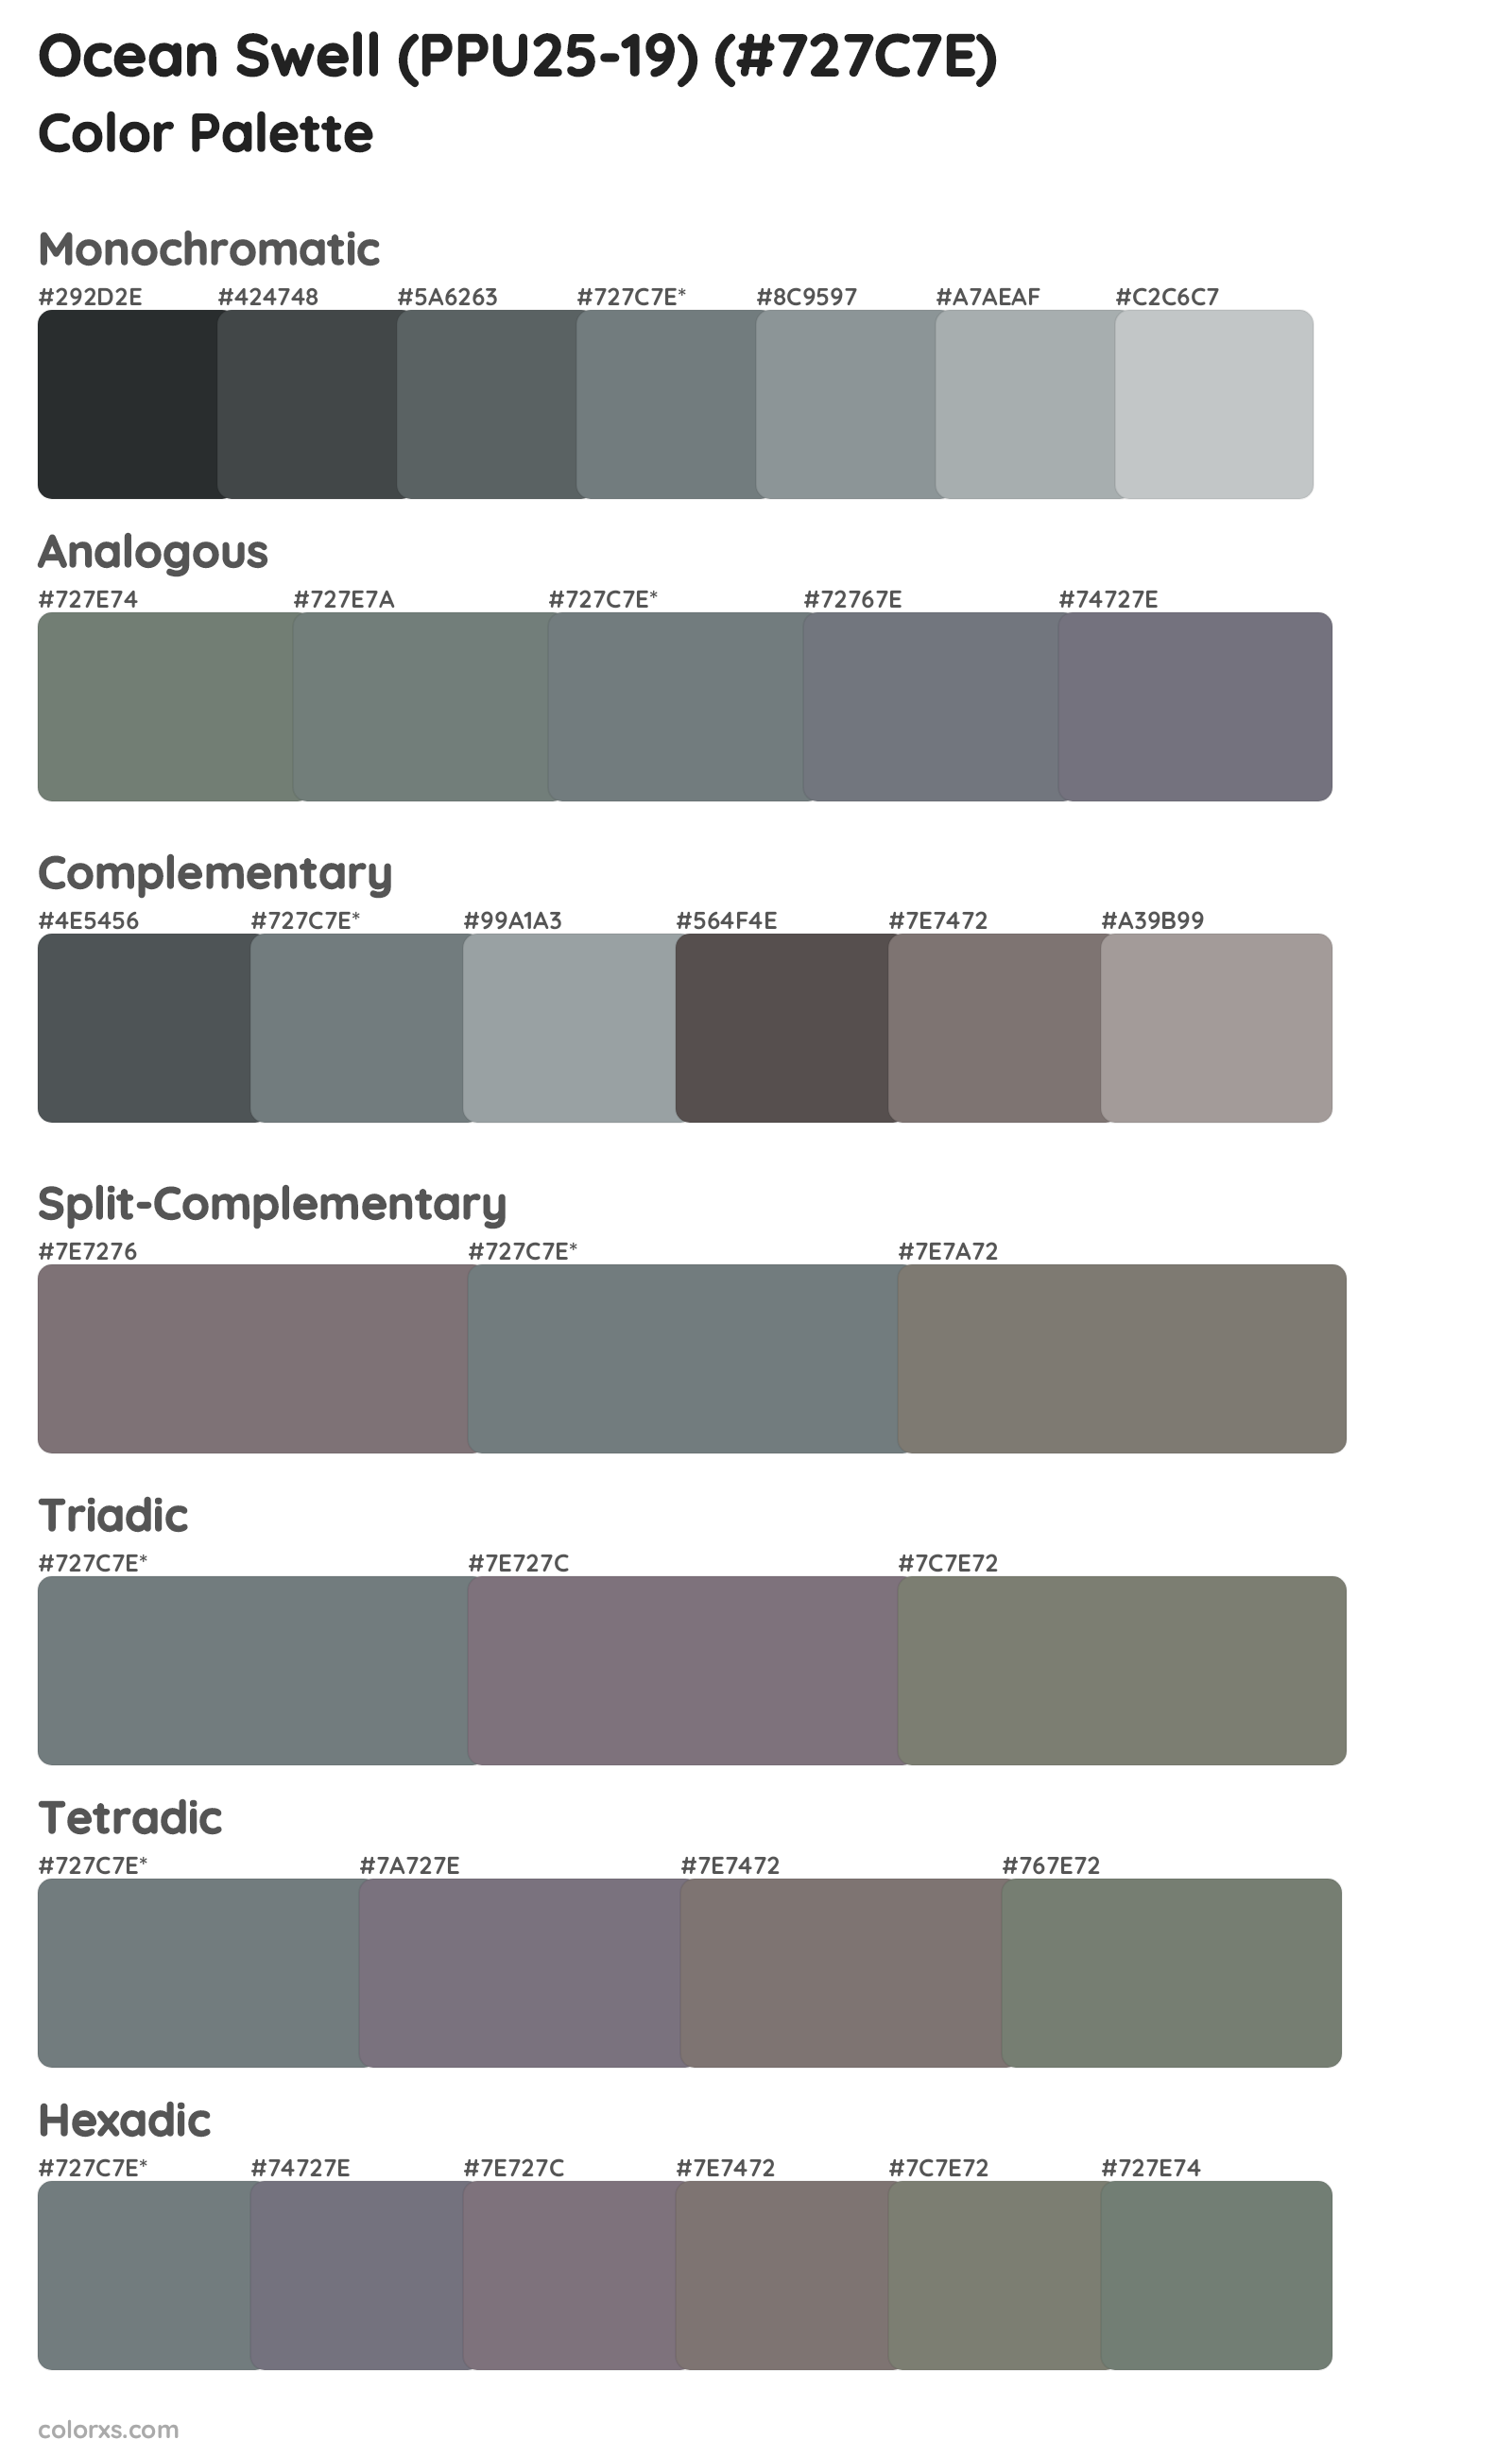 Ocean Swell (PPU25-19) Color Scheme Palettes